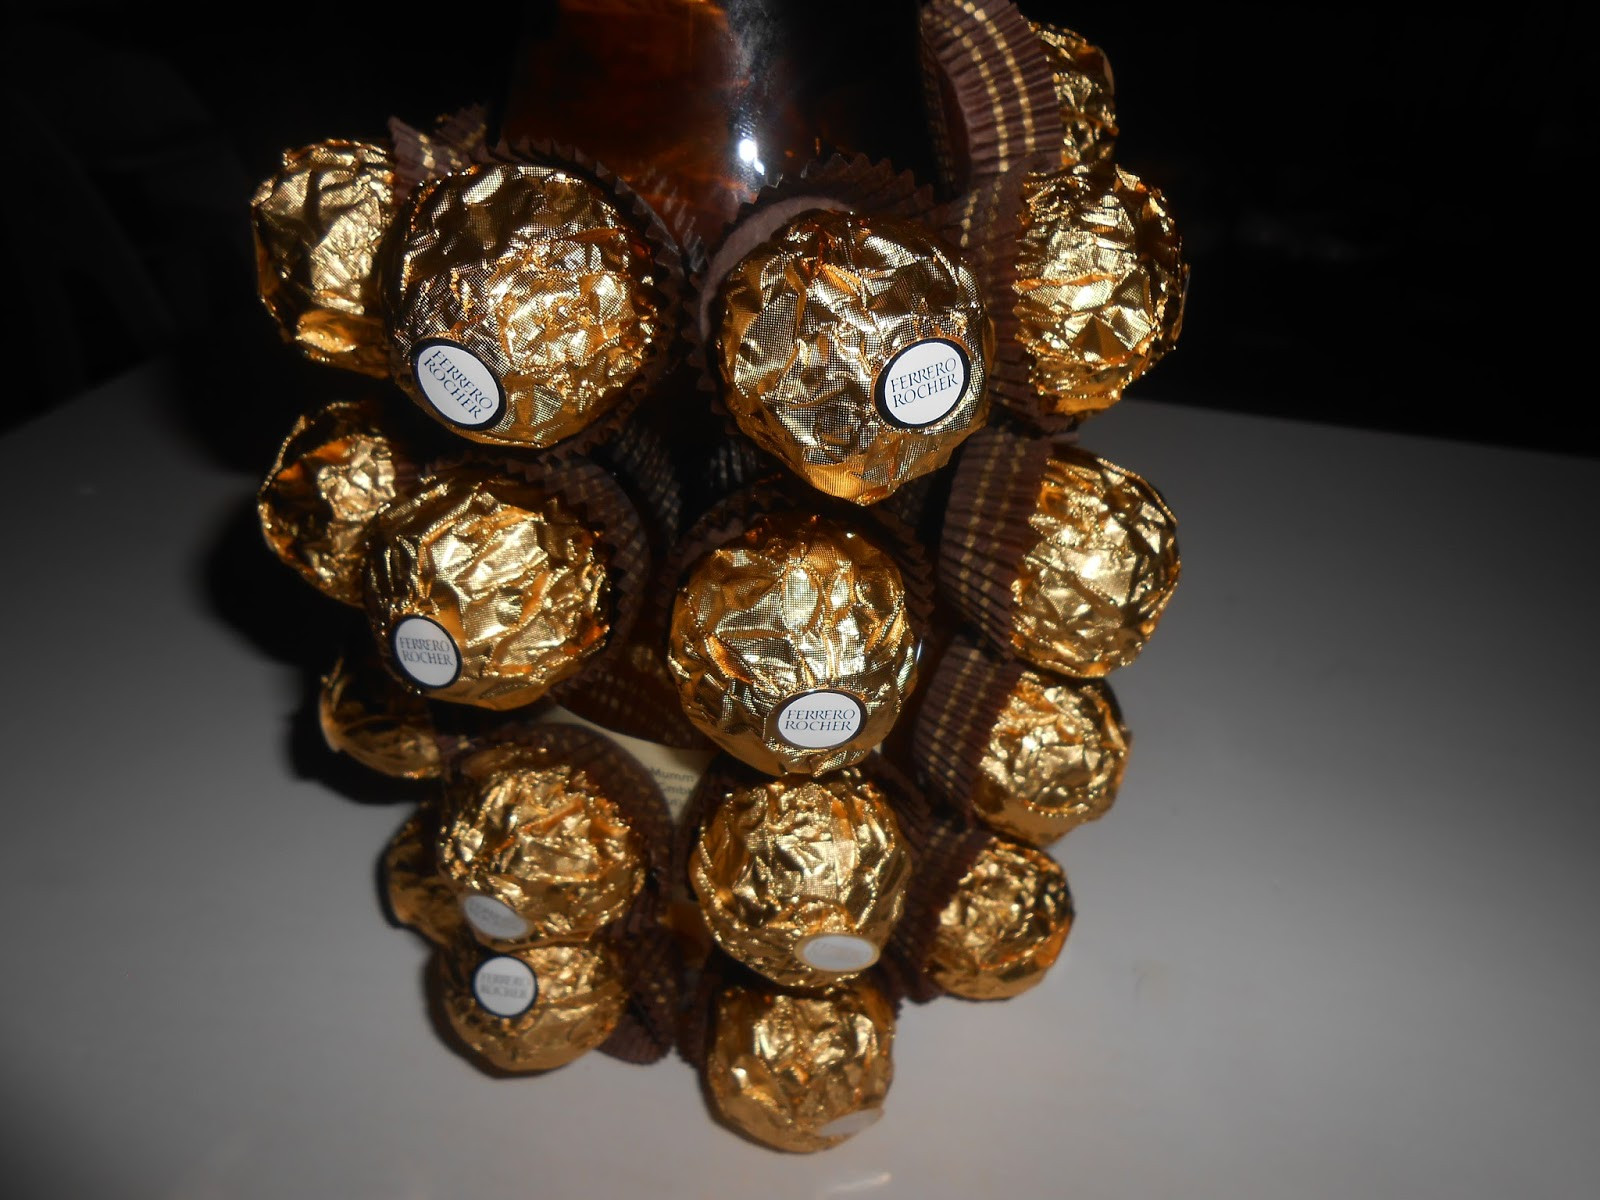 Ferrero Rocher Geschenkideen
 Geschenkideen Mit Ferrero Rocher Basteln